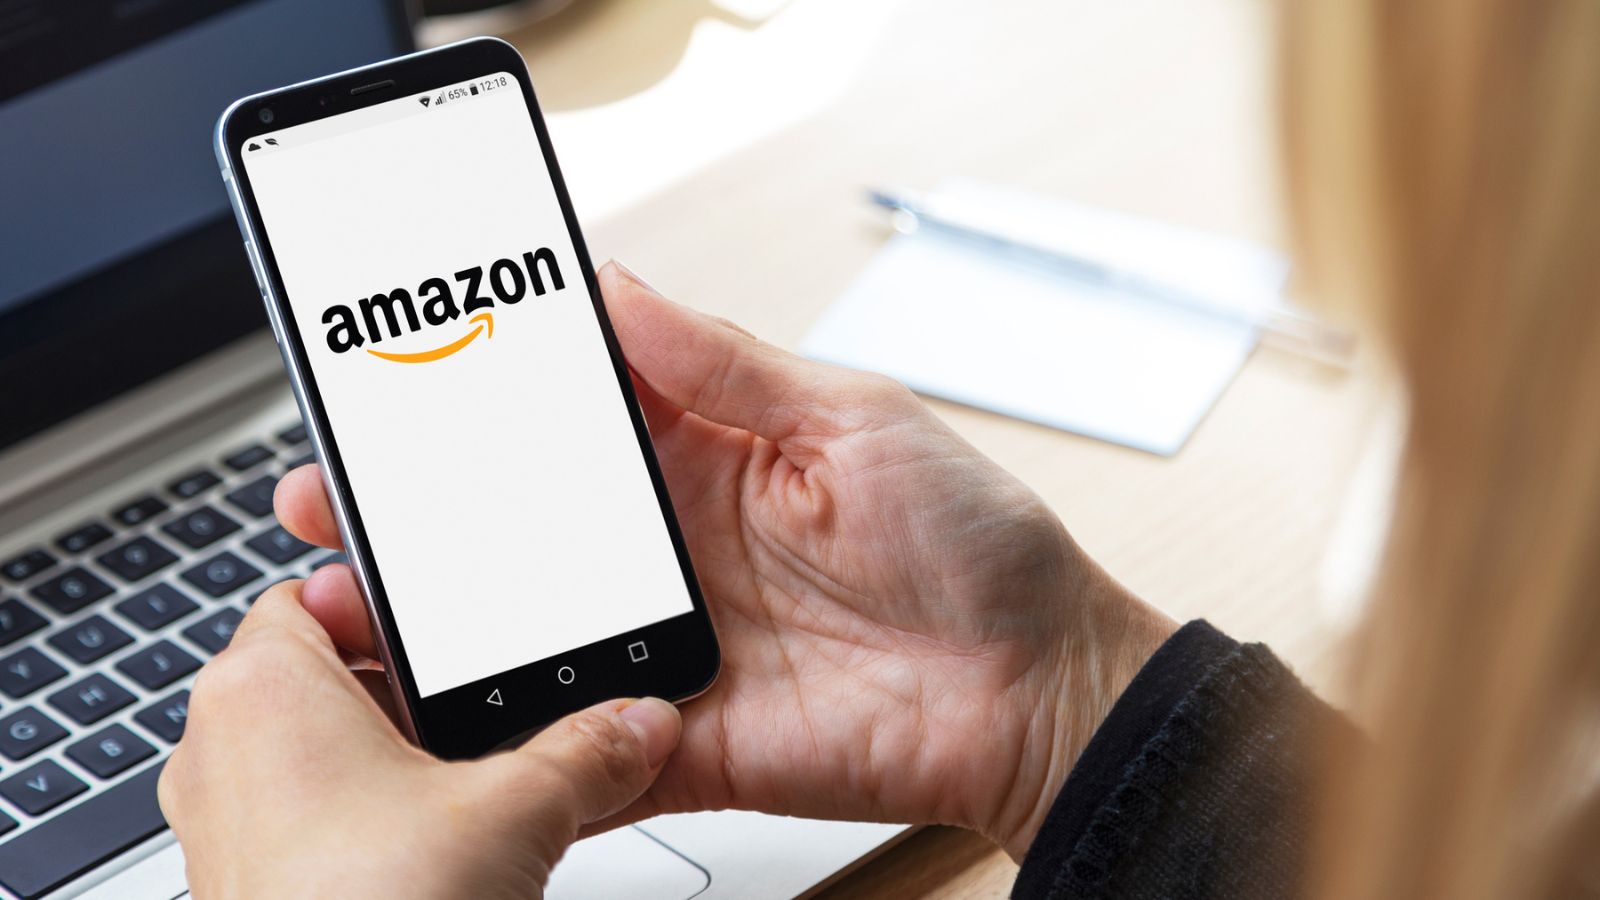 Amazon faces landmark monopoly lawsuit by FTC